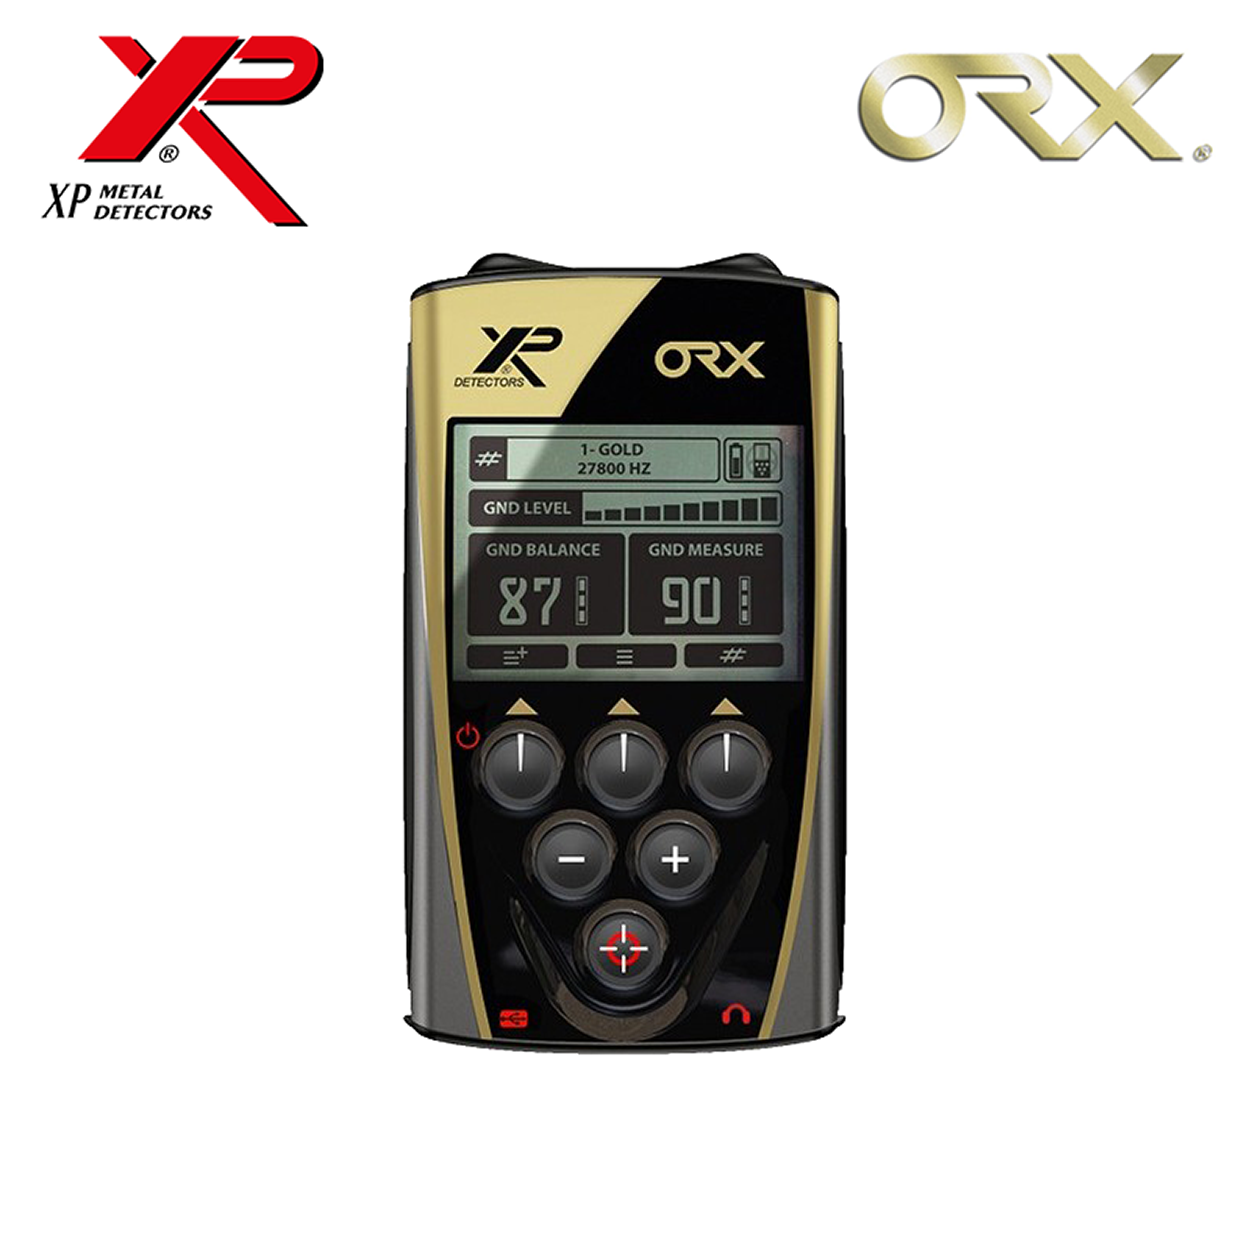 Metalldetektor XP RC (ORX-ELLHFRCG) HF EL ORX